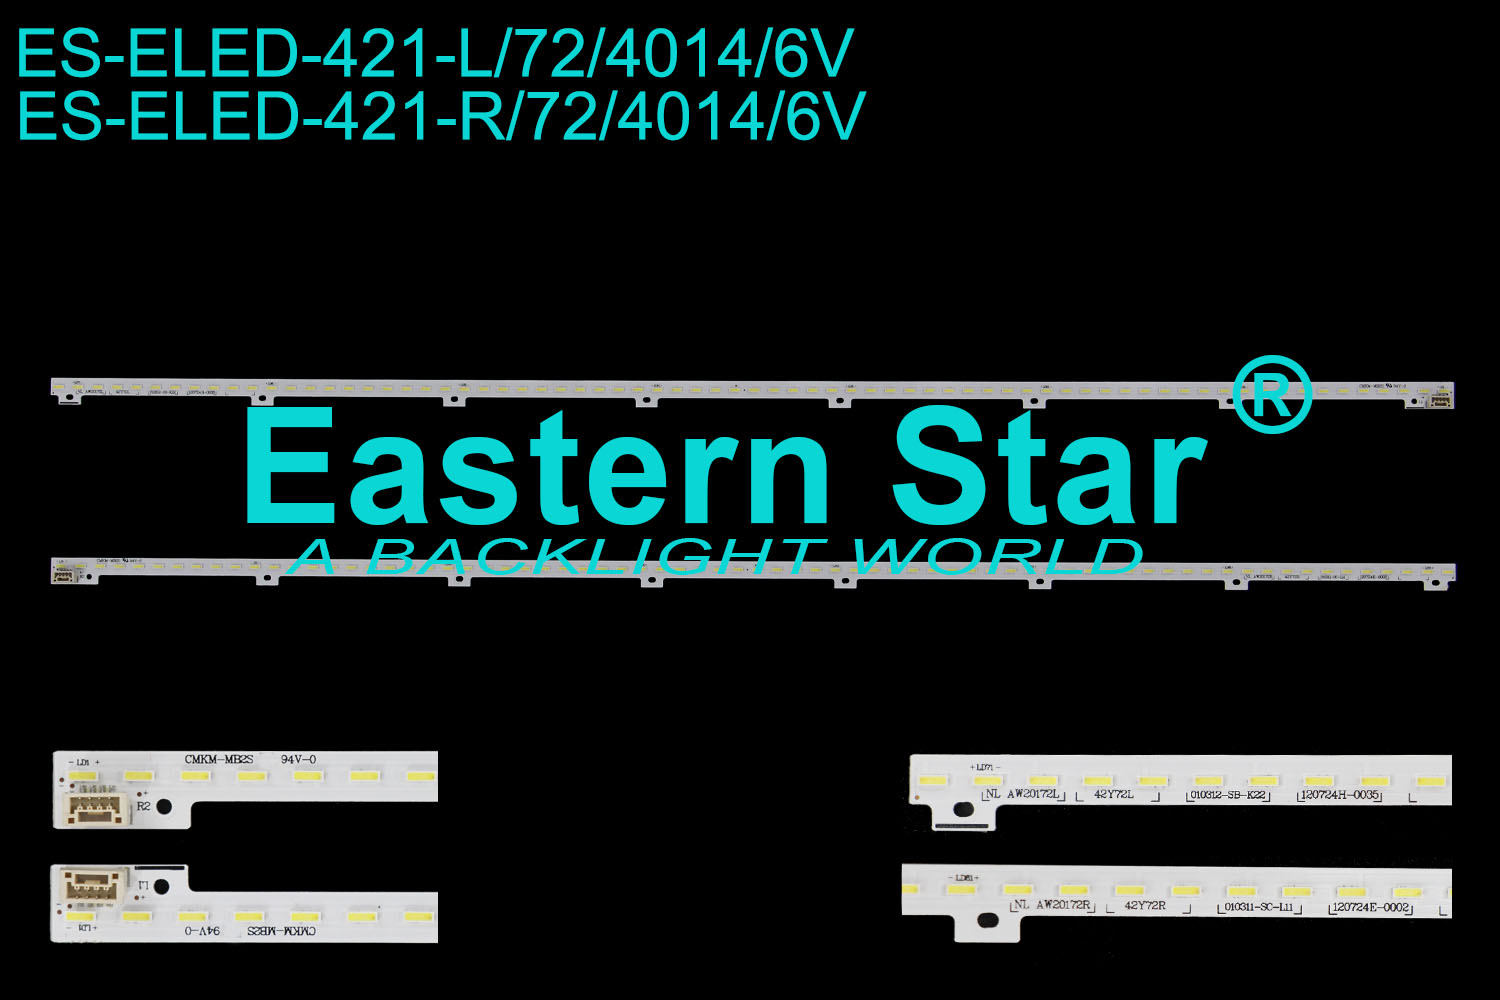 ES-ELED-421 ELED/EDGE TV backlight use for 42'' Sony CMKM-MB2S NL AW20172L 42Y72L 010312-SB-K22 120724H-0035 CMKM-MB2S NL AW20172R 42Y72R 010311-SC-L11 120724E-0002 LED STRIPS(2)